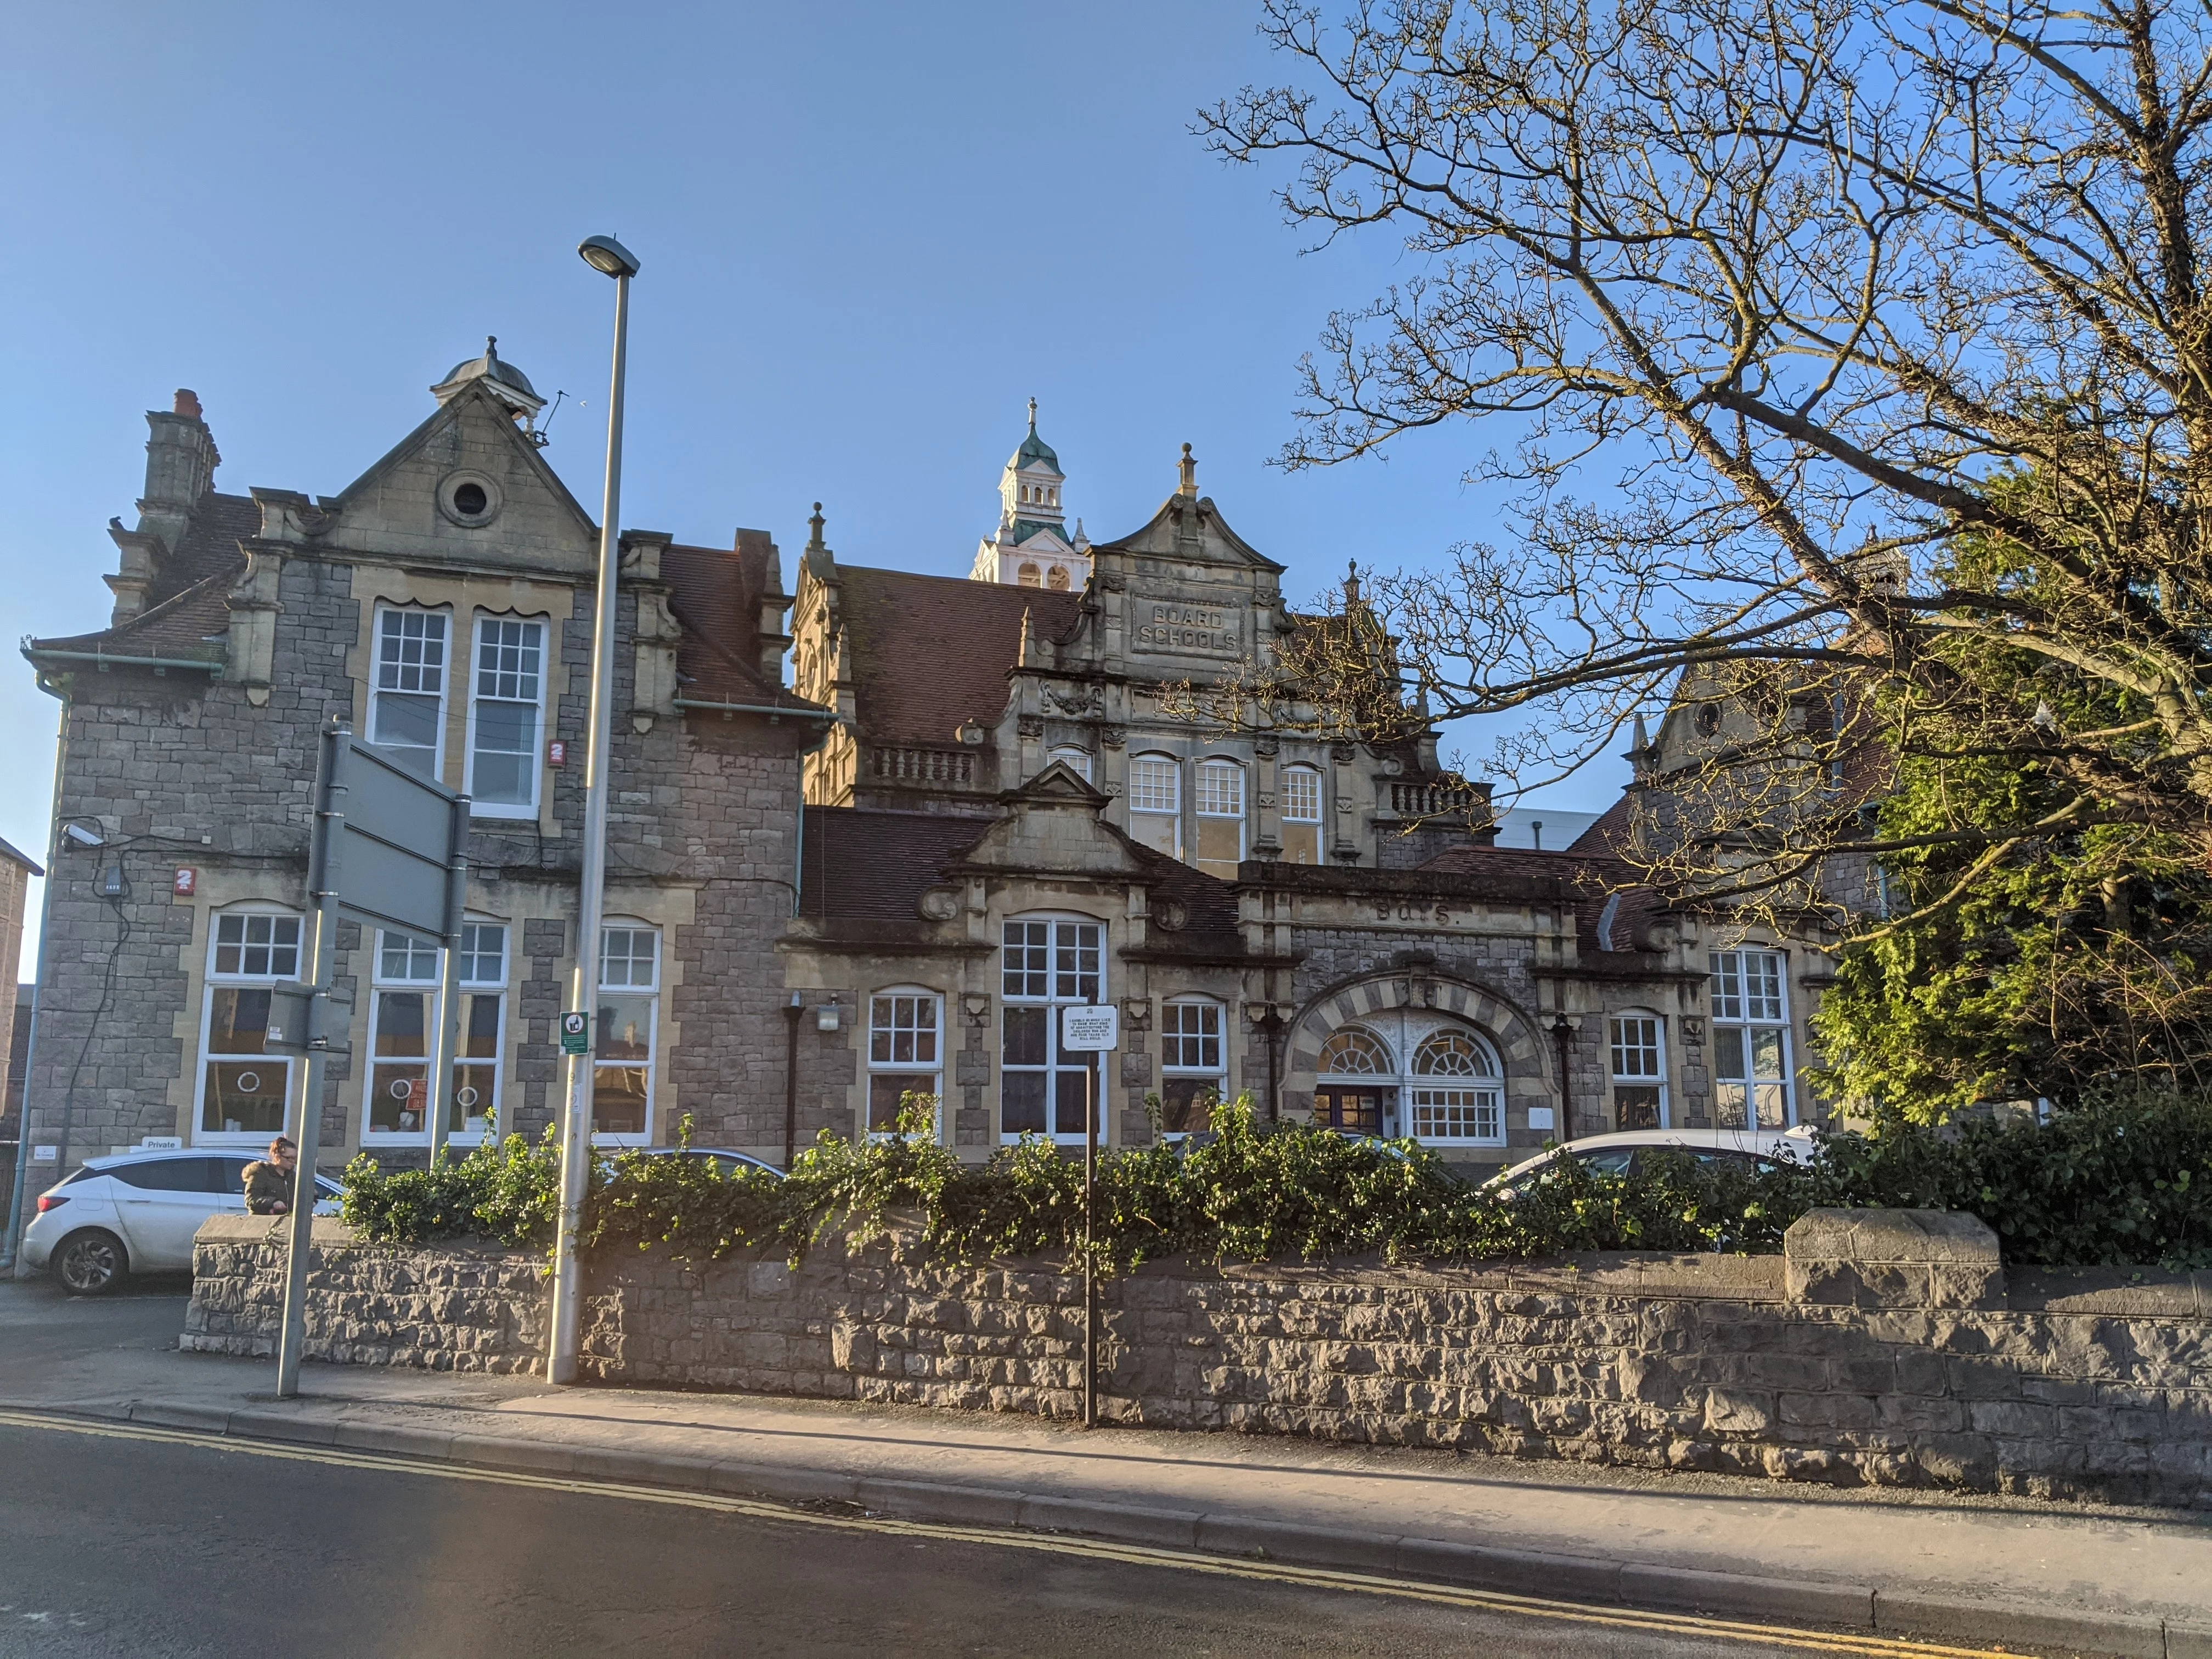 A photo of Walliscote Primary School in Weston-super-Mare.